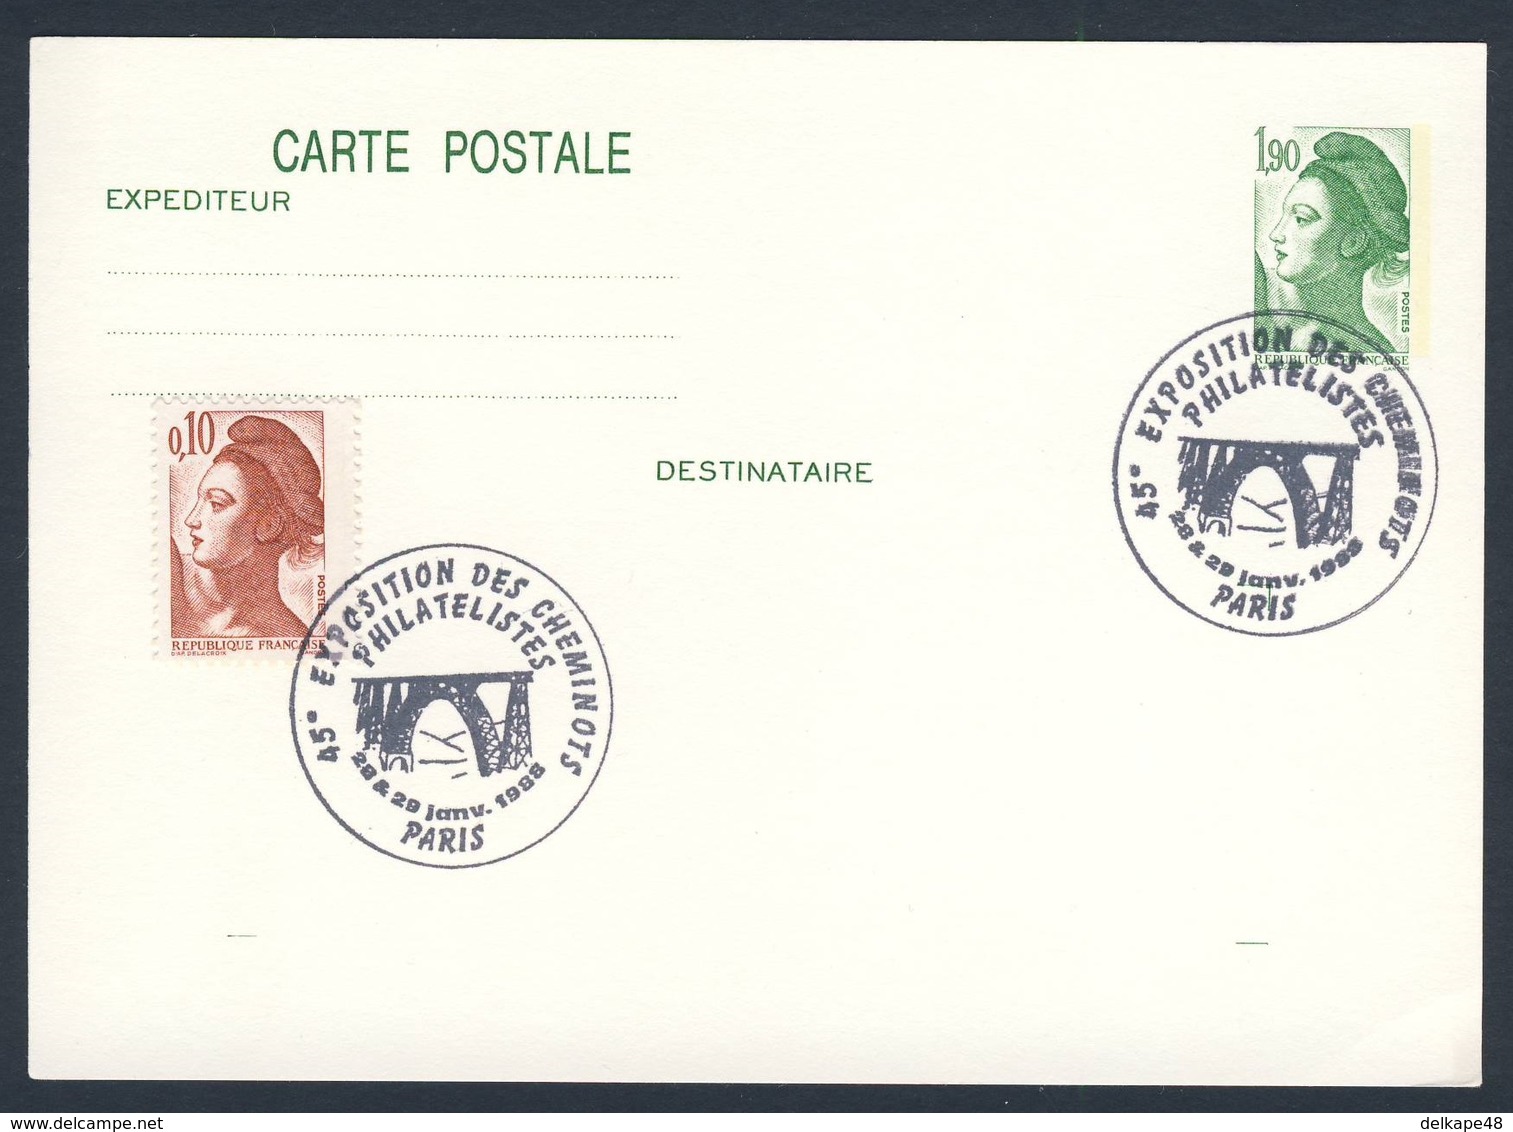 France Rep. Française 1988 Card / Karte / Carte - 45e Exp. Cheminots Philatelistes 1988, Paris / Ausstellung - Treinen